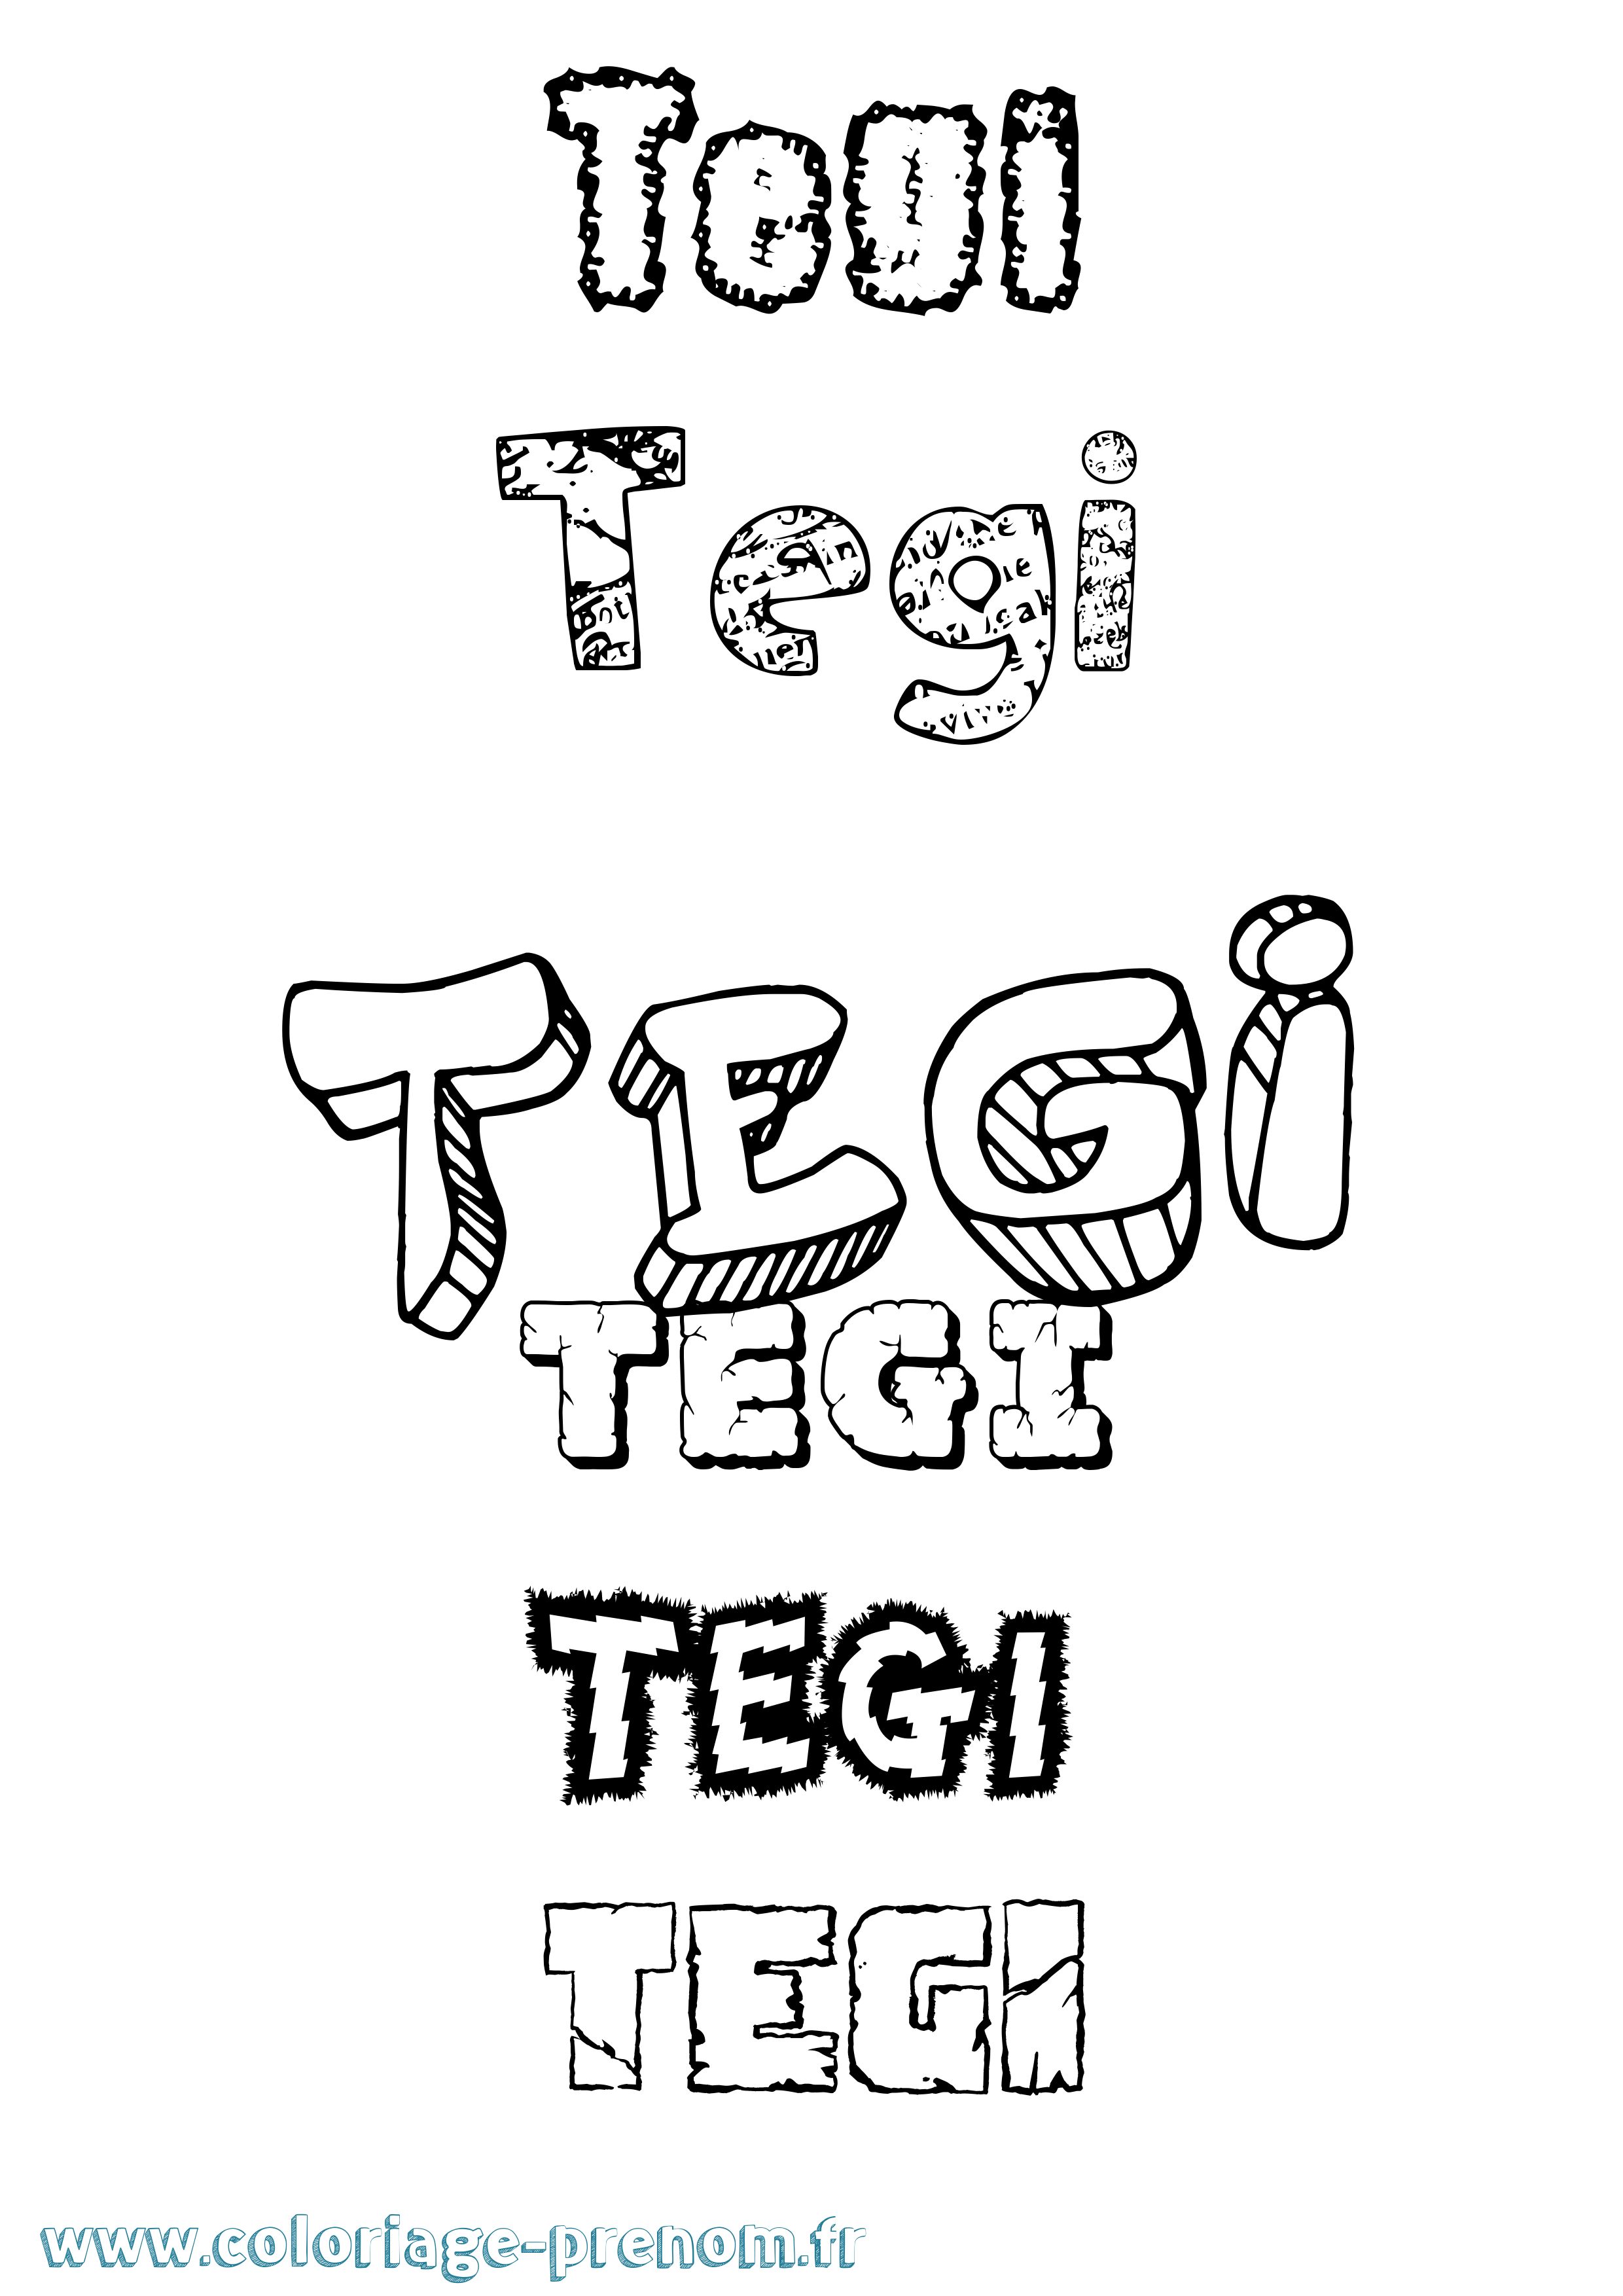 Coloriage prénom Tegi Destructuré